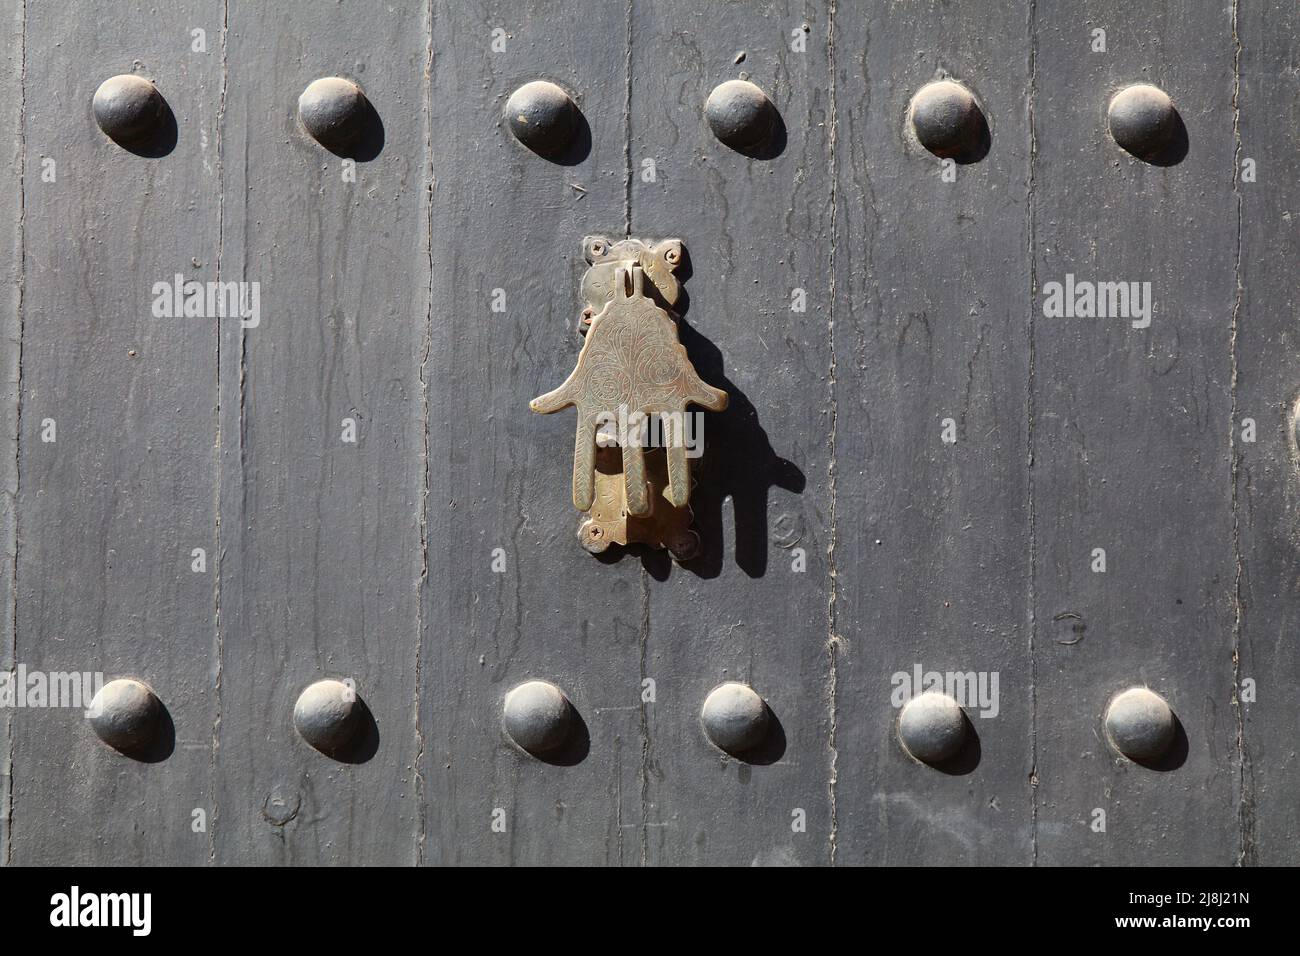 Hamsa, Hand of Fatima door knocker. Traditional Moroccan architecture feature in Marrakech, Morocco. Stock Photo